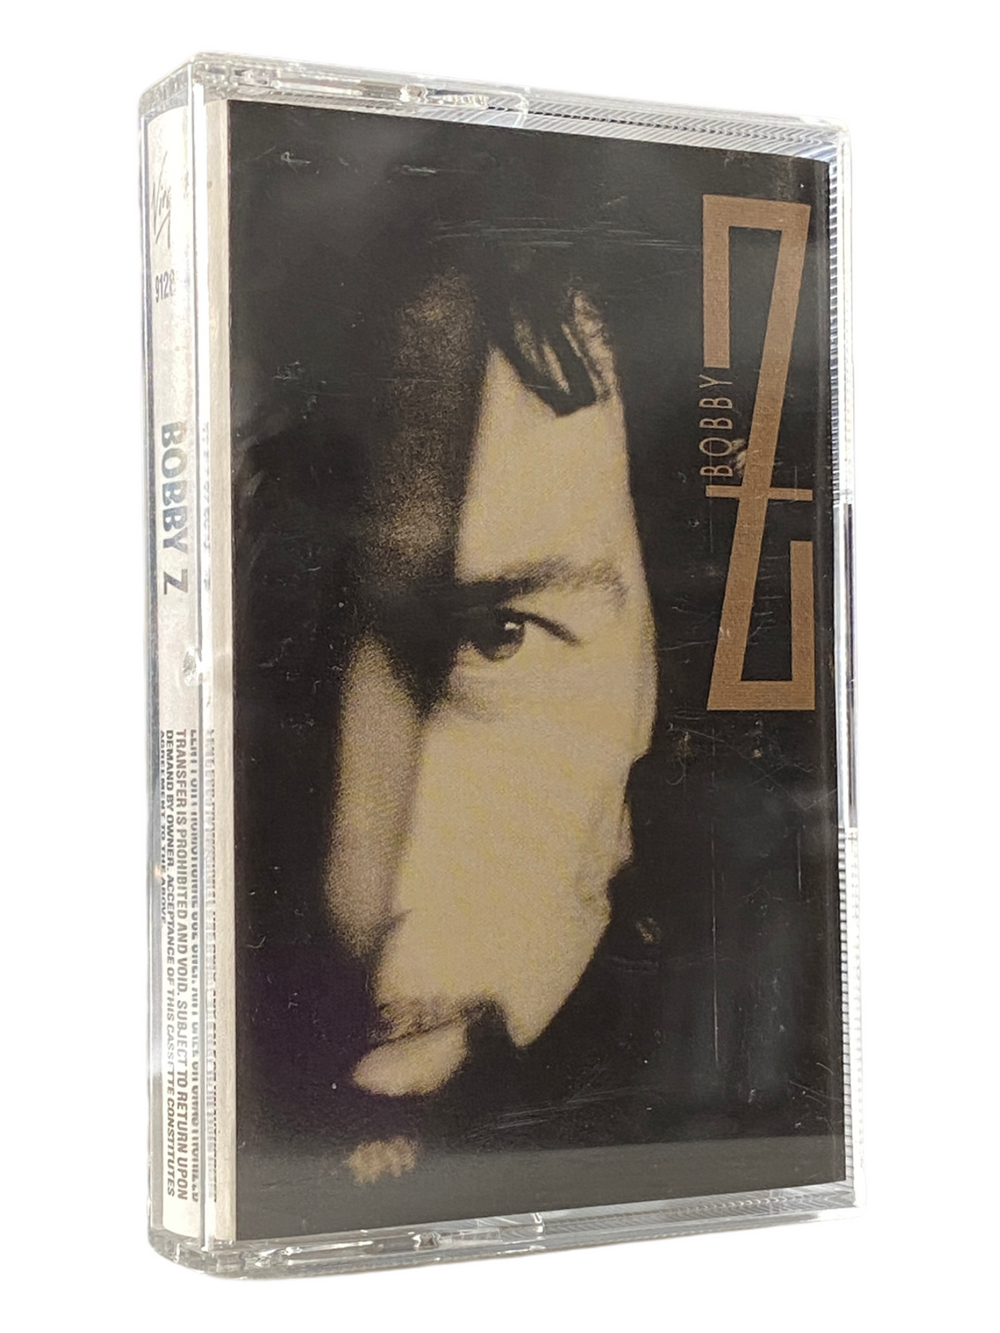 Prince – Bobby Z Self Titled Original Cassette Tape USA 1989 Release Prince